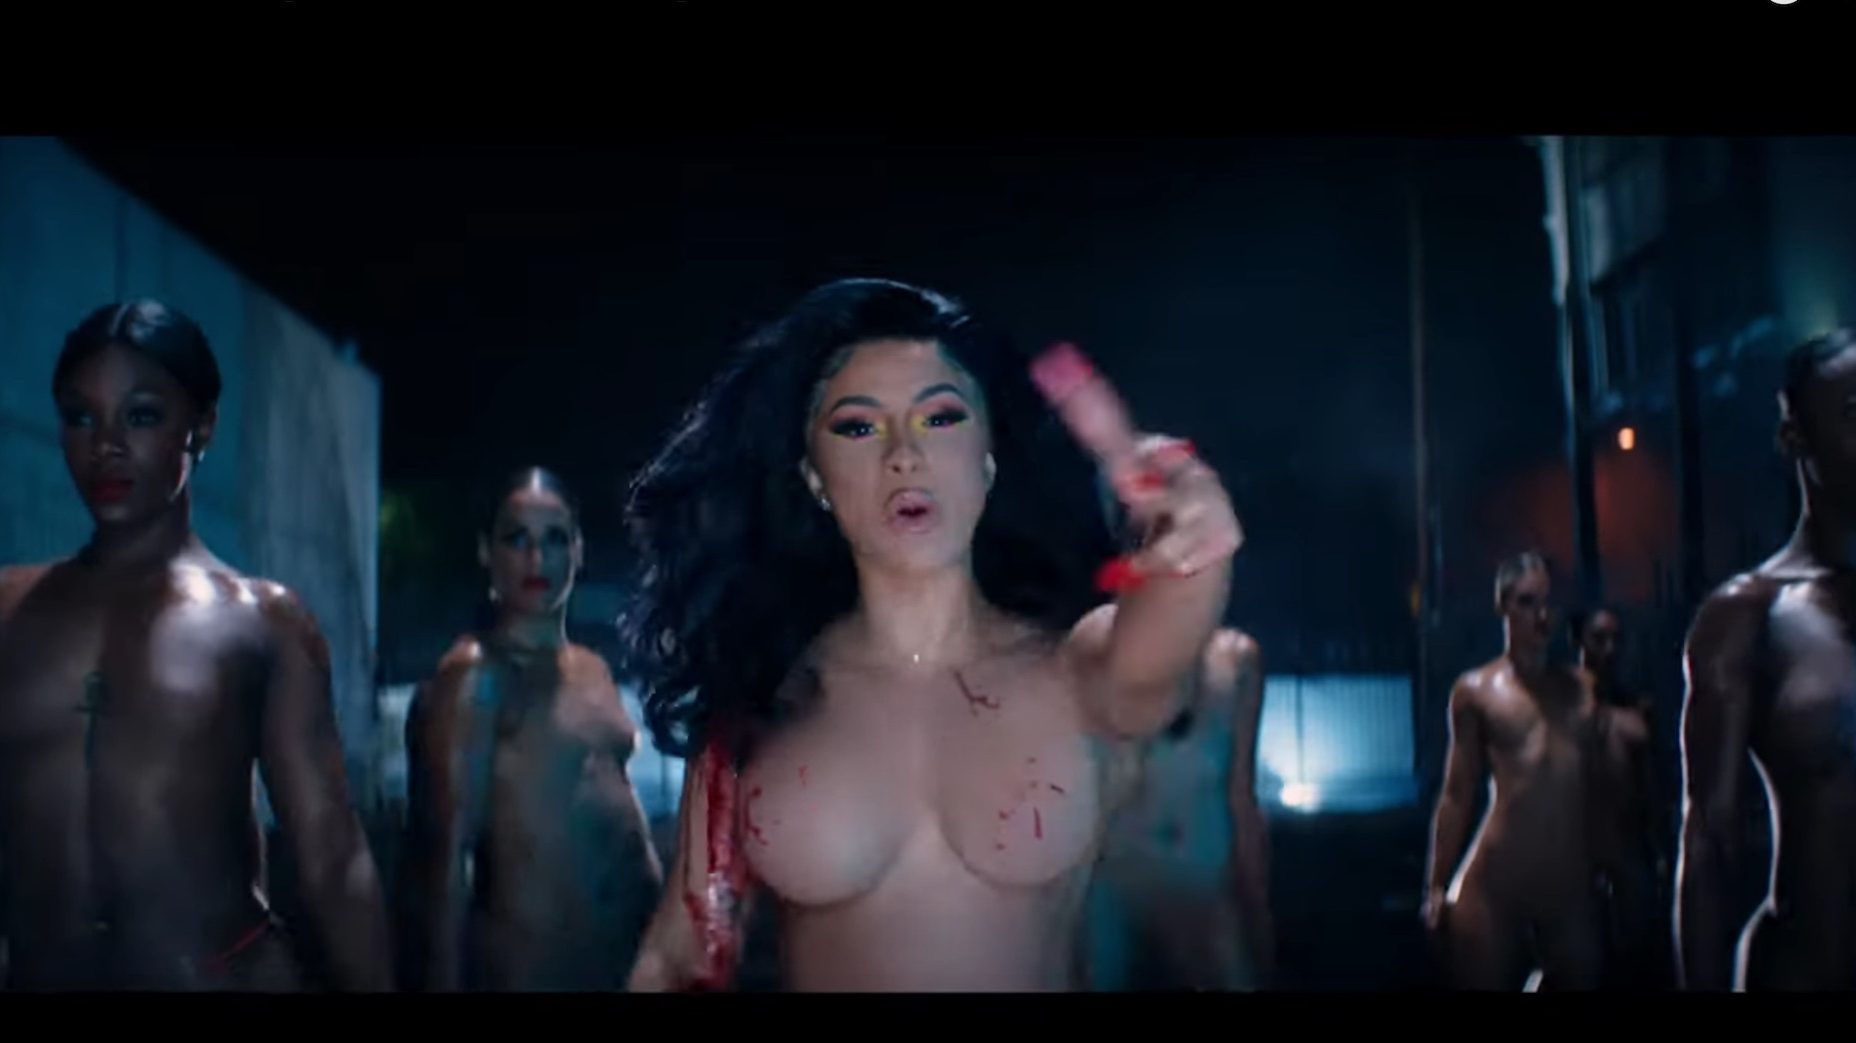 abhijeet lokhande add most nude music video photo